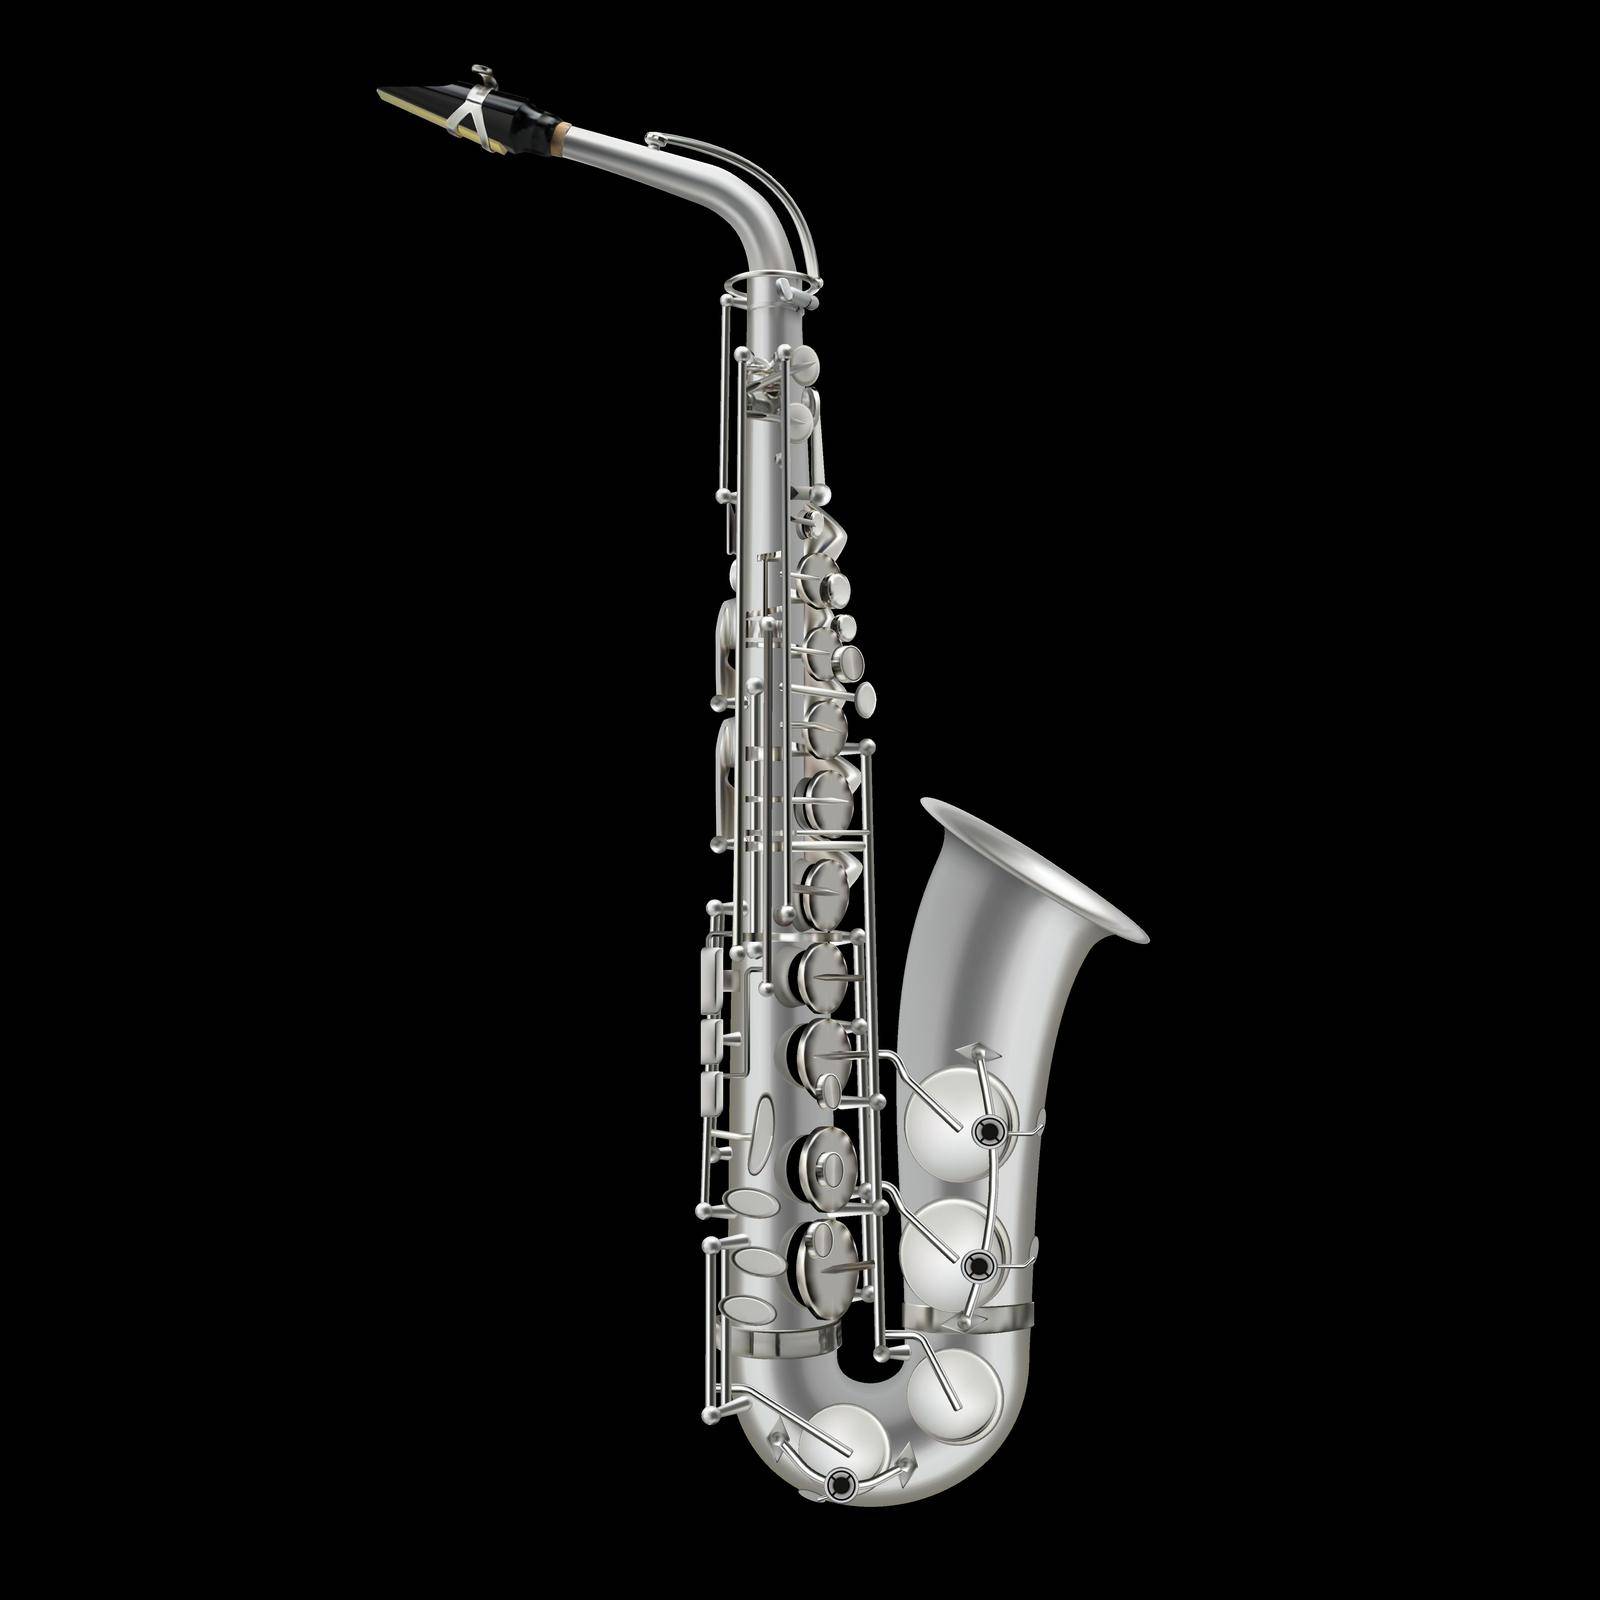 photorealistic saxophone isolated on a black background by lem